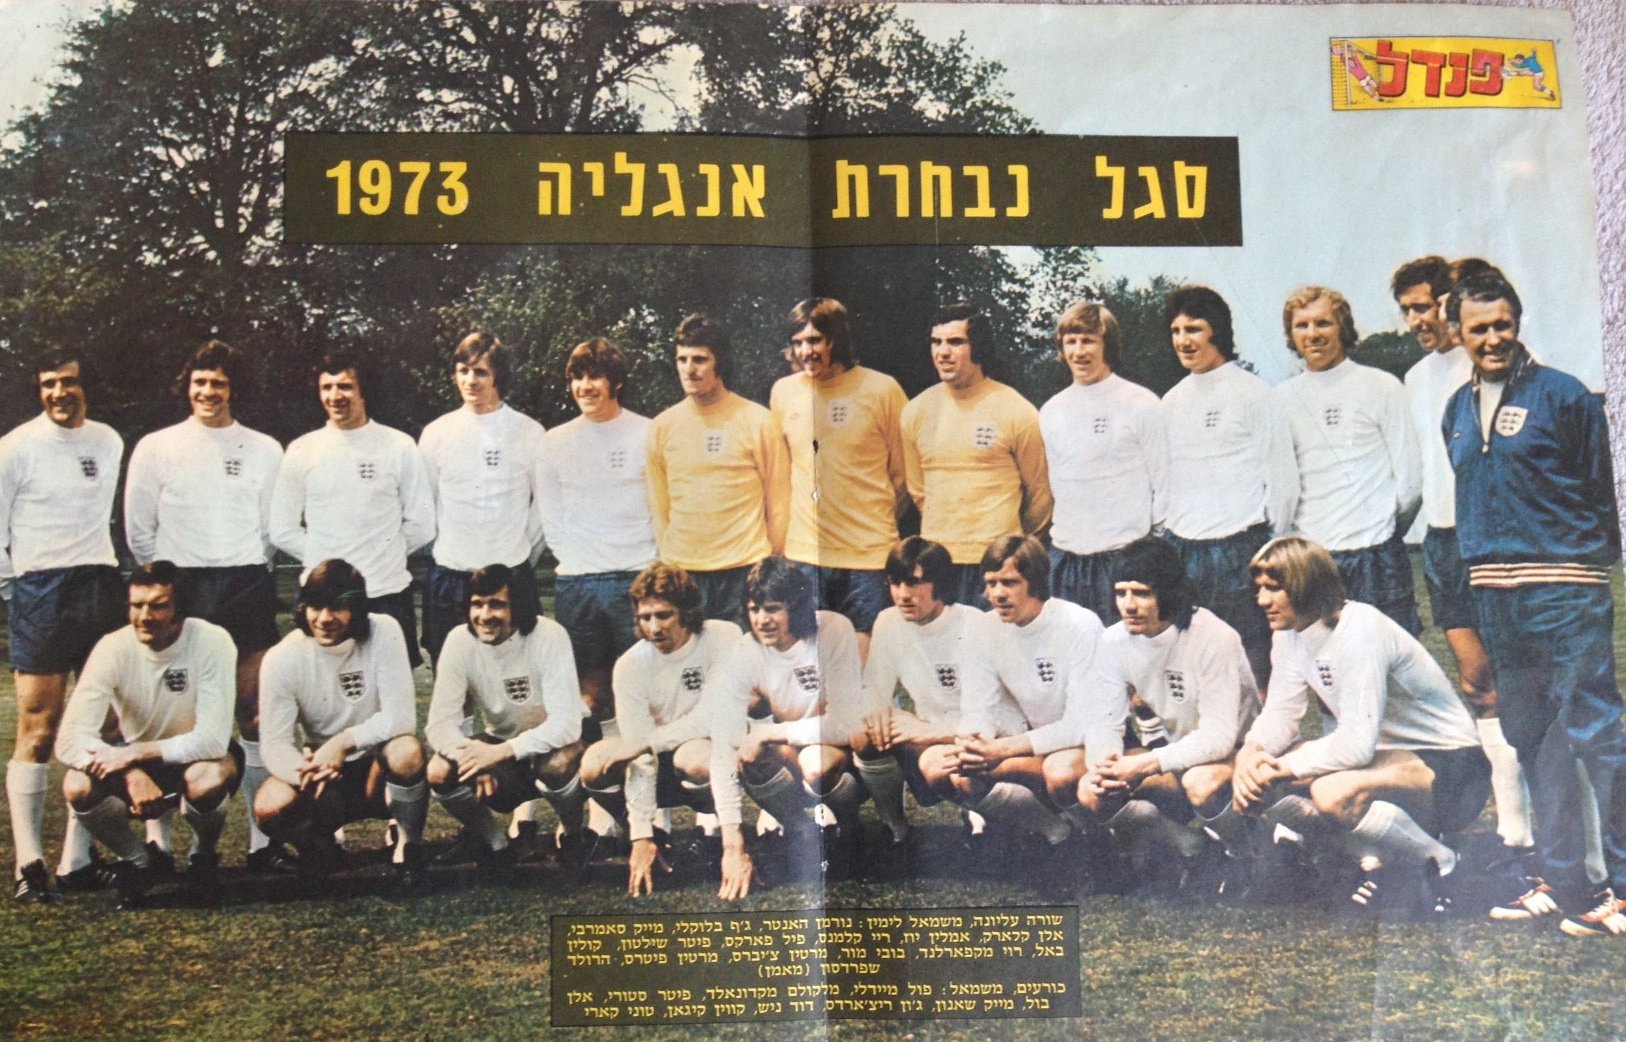 England National Team photo 1973, Pendel magazine poster